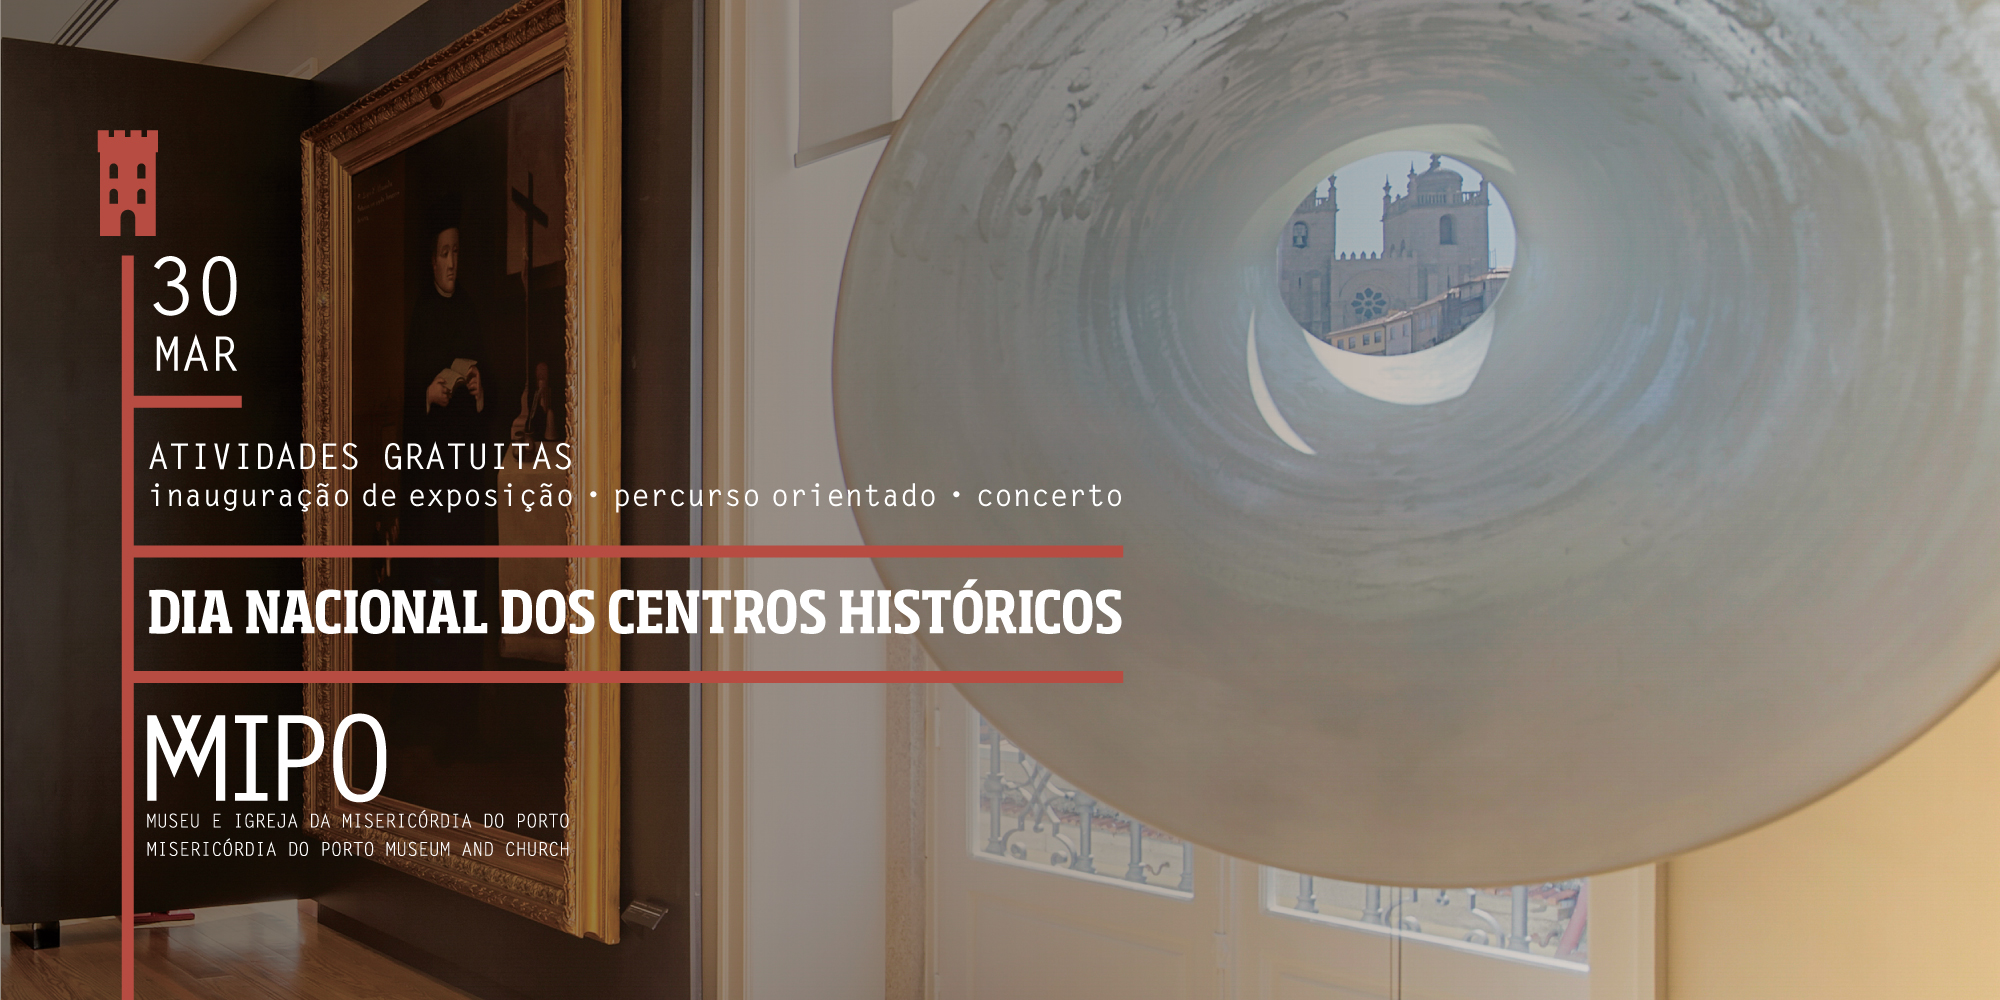 http://www.mmipo.pt/assets/misc/slideshow/2019/2019-03-30%20DNCH/MMIPO-dia-nacional-centros-historicos-banner-site.jpg